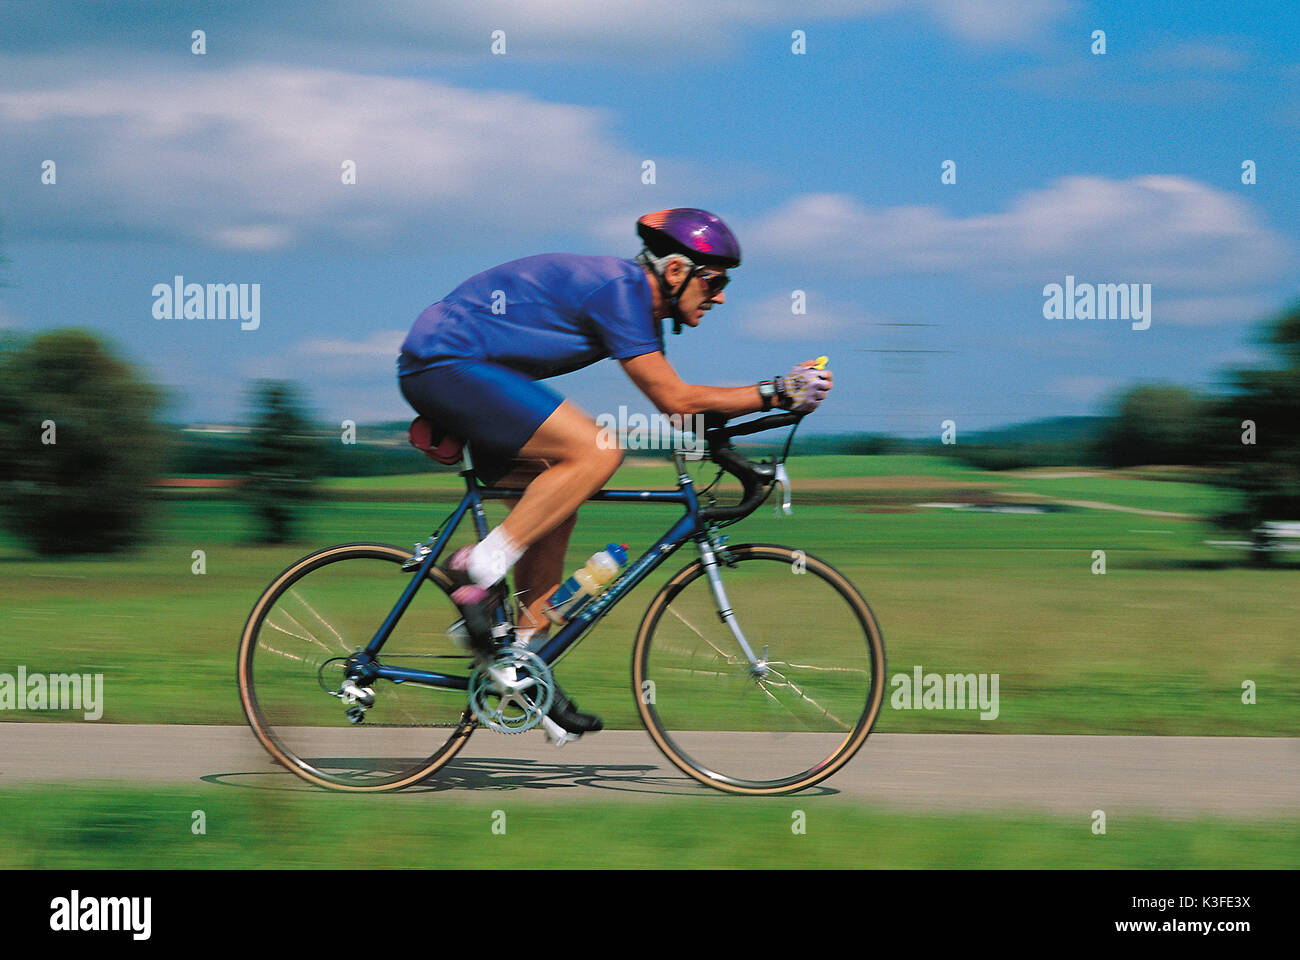 Rennrad Sportler auf dem Fahrrad Stockfotografie - Alamy